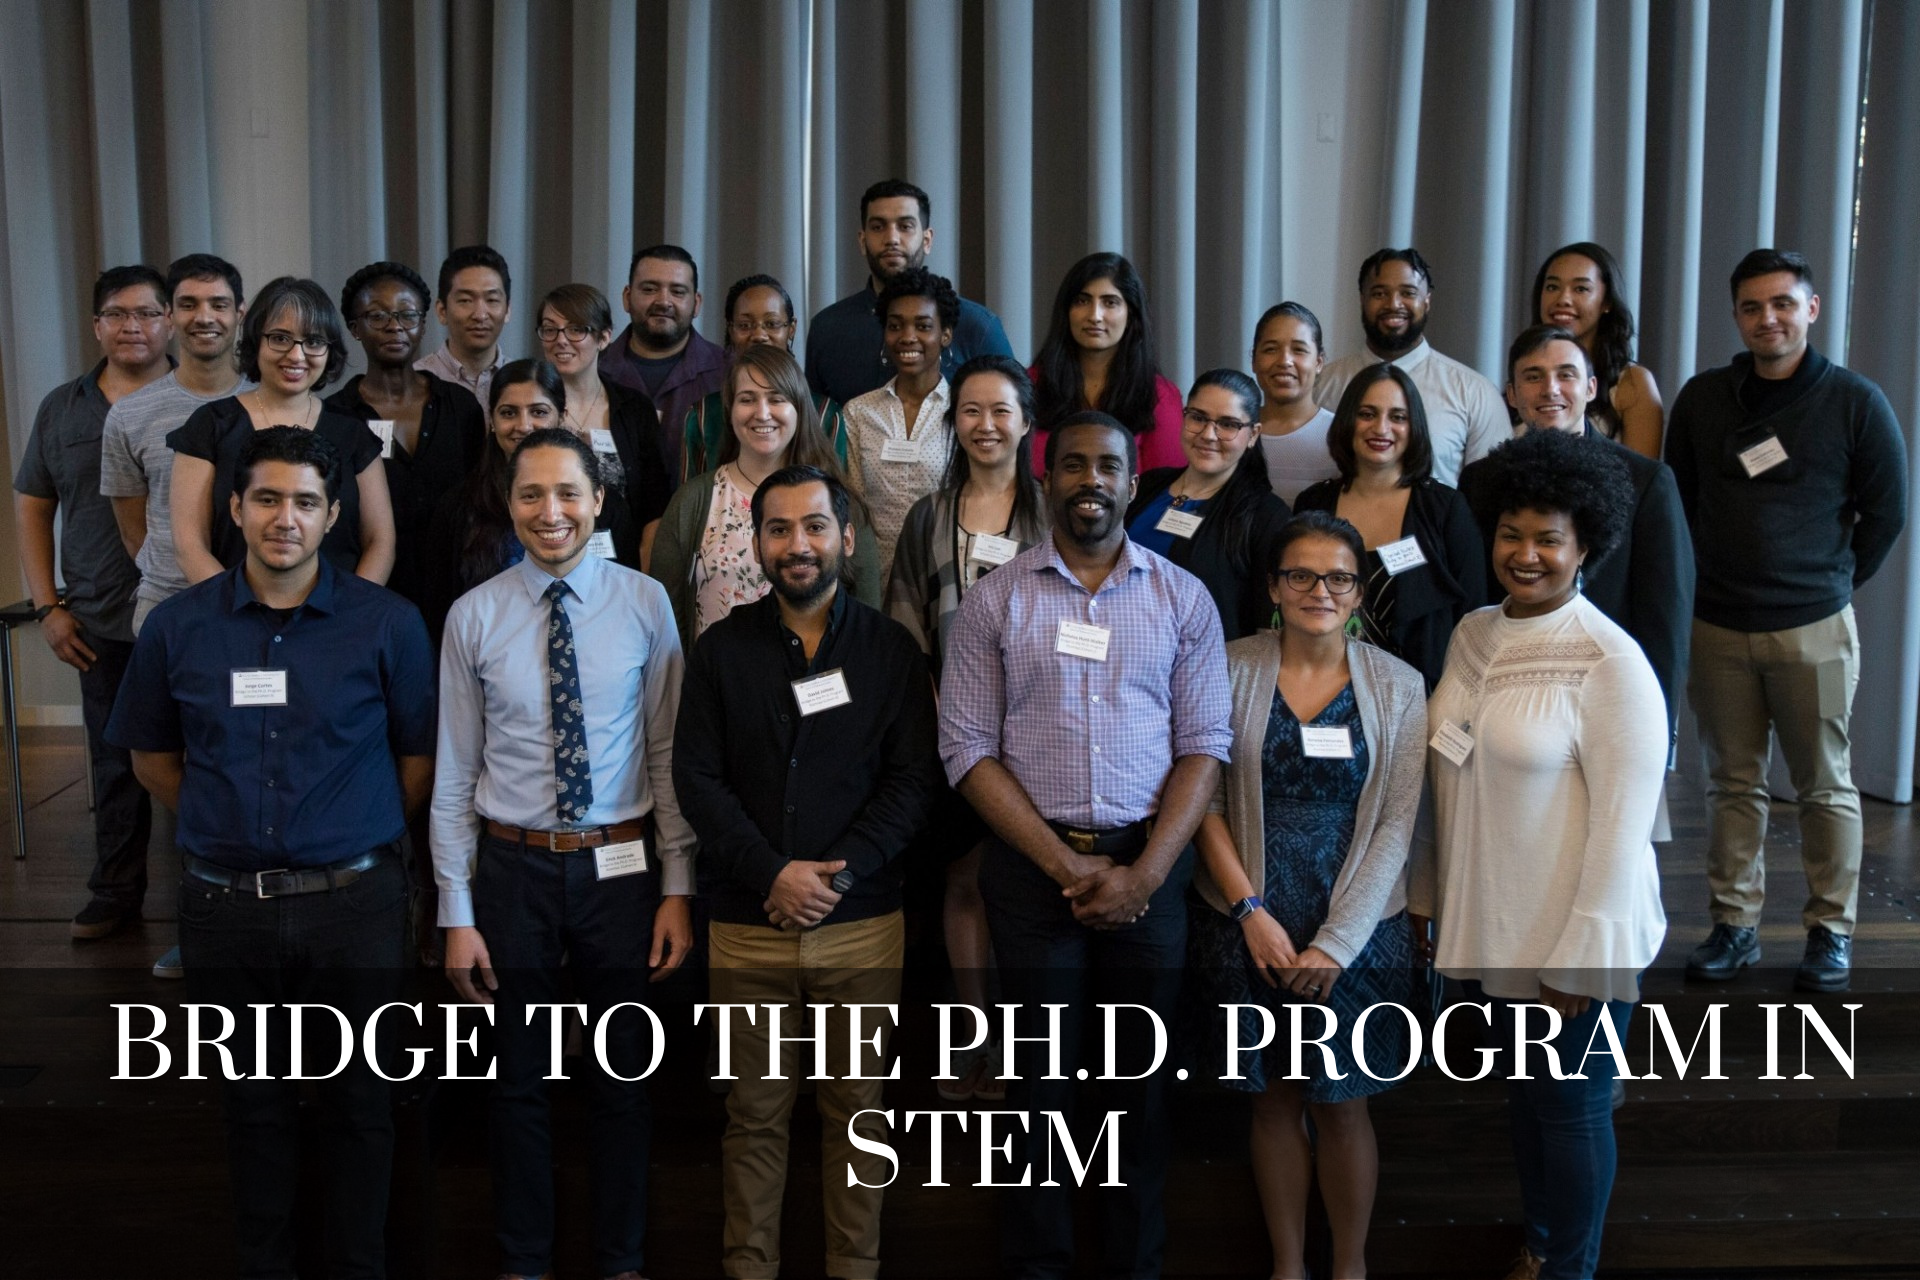 Columbia University's Bridge to the Ph.D. Program in STEM